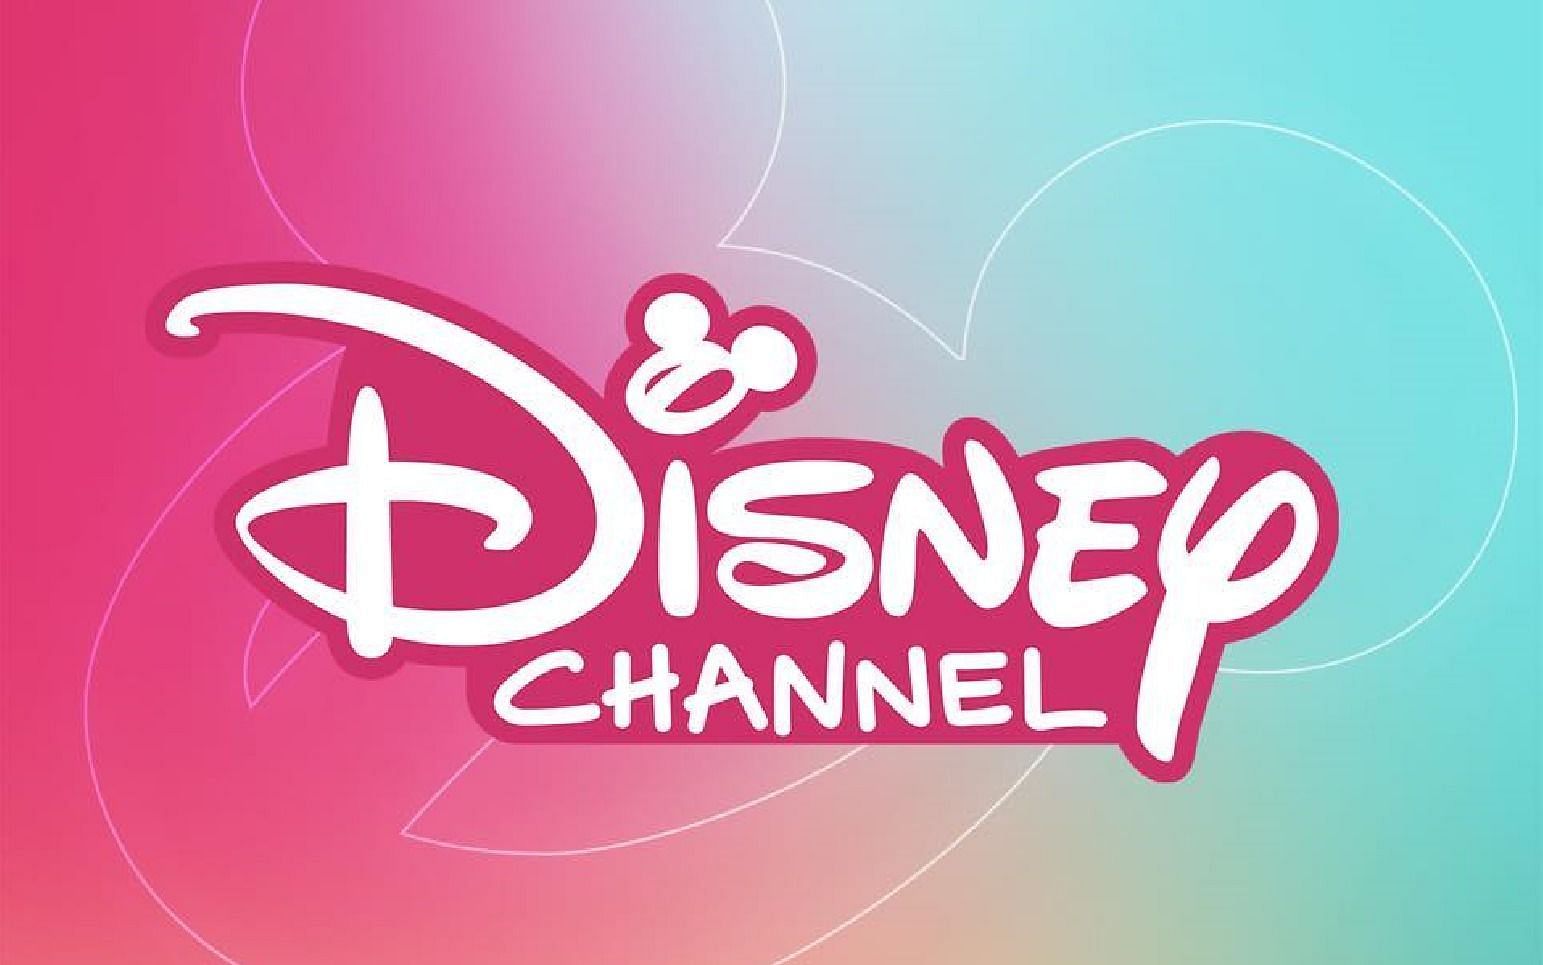 Передач канала дисней. Канал Disney. Телеканал Дисней. Дисней канал логотип. Дисней Чаннел.